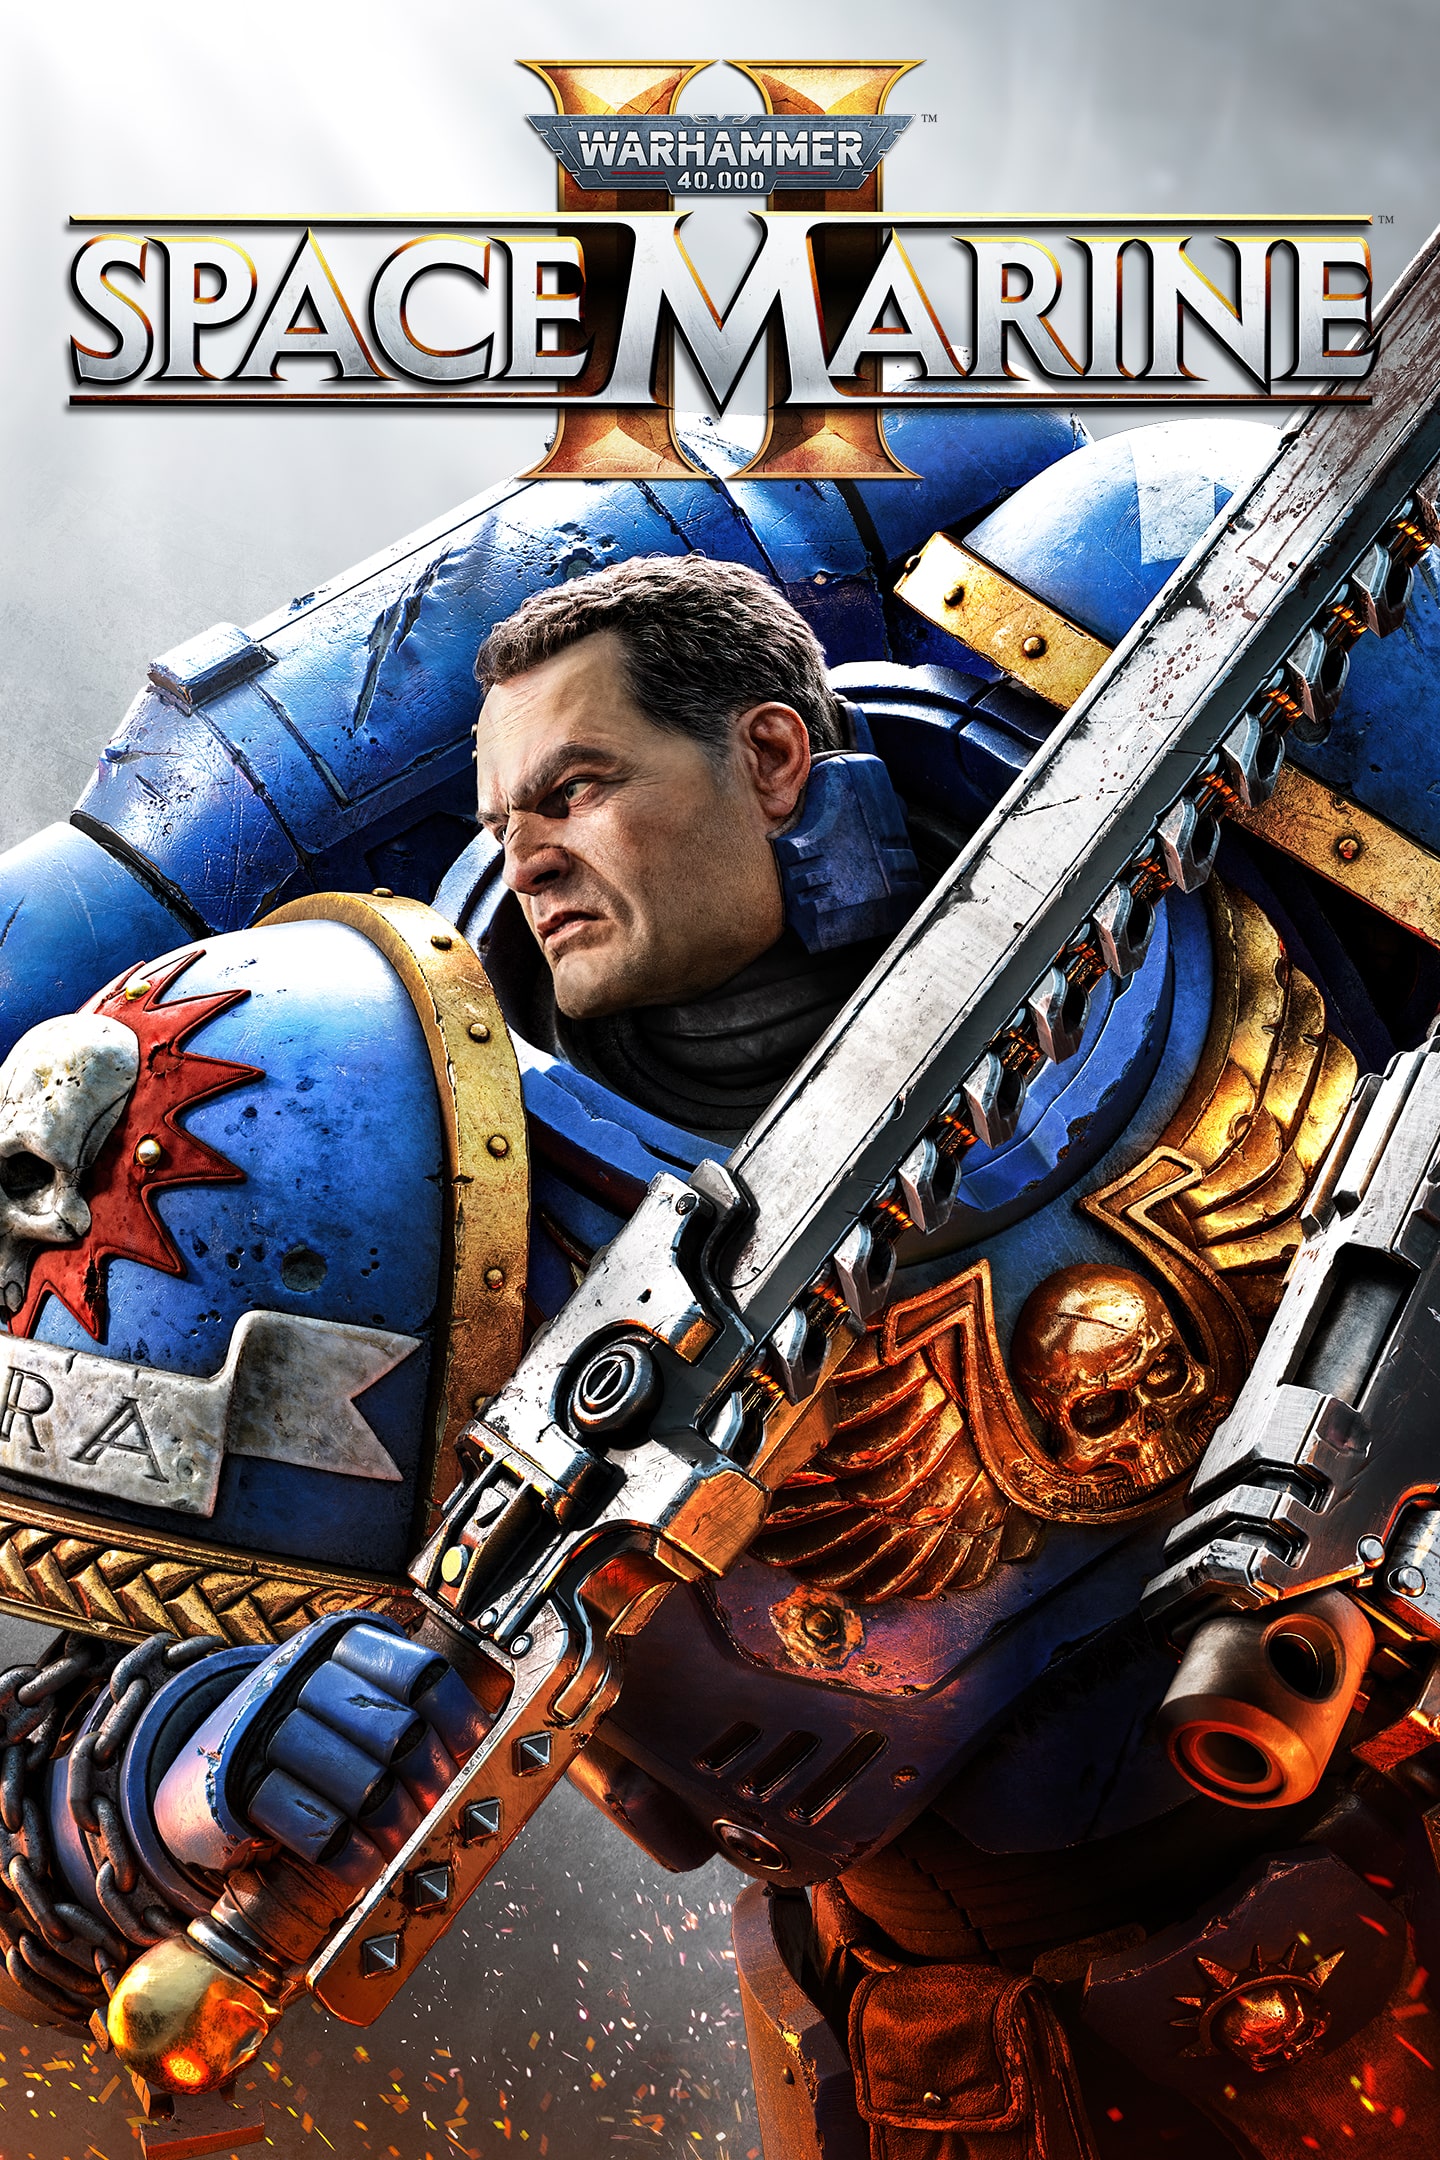 jaquette reduite de Warhammer 40000: Space Marine 2 sur PC